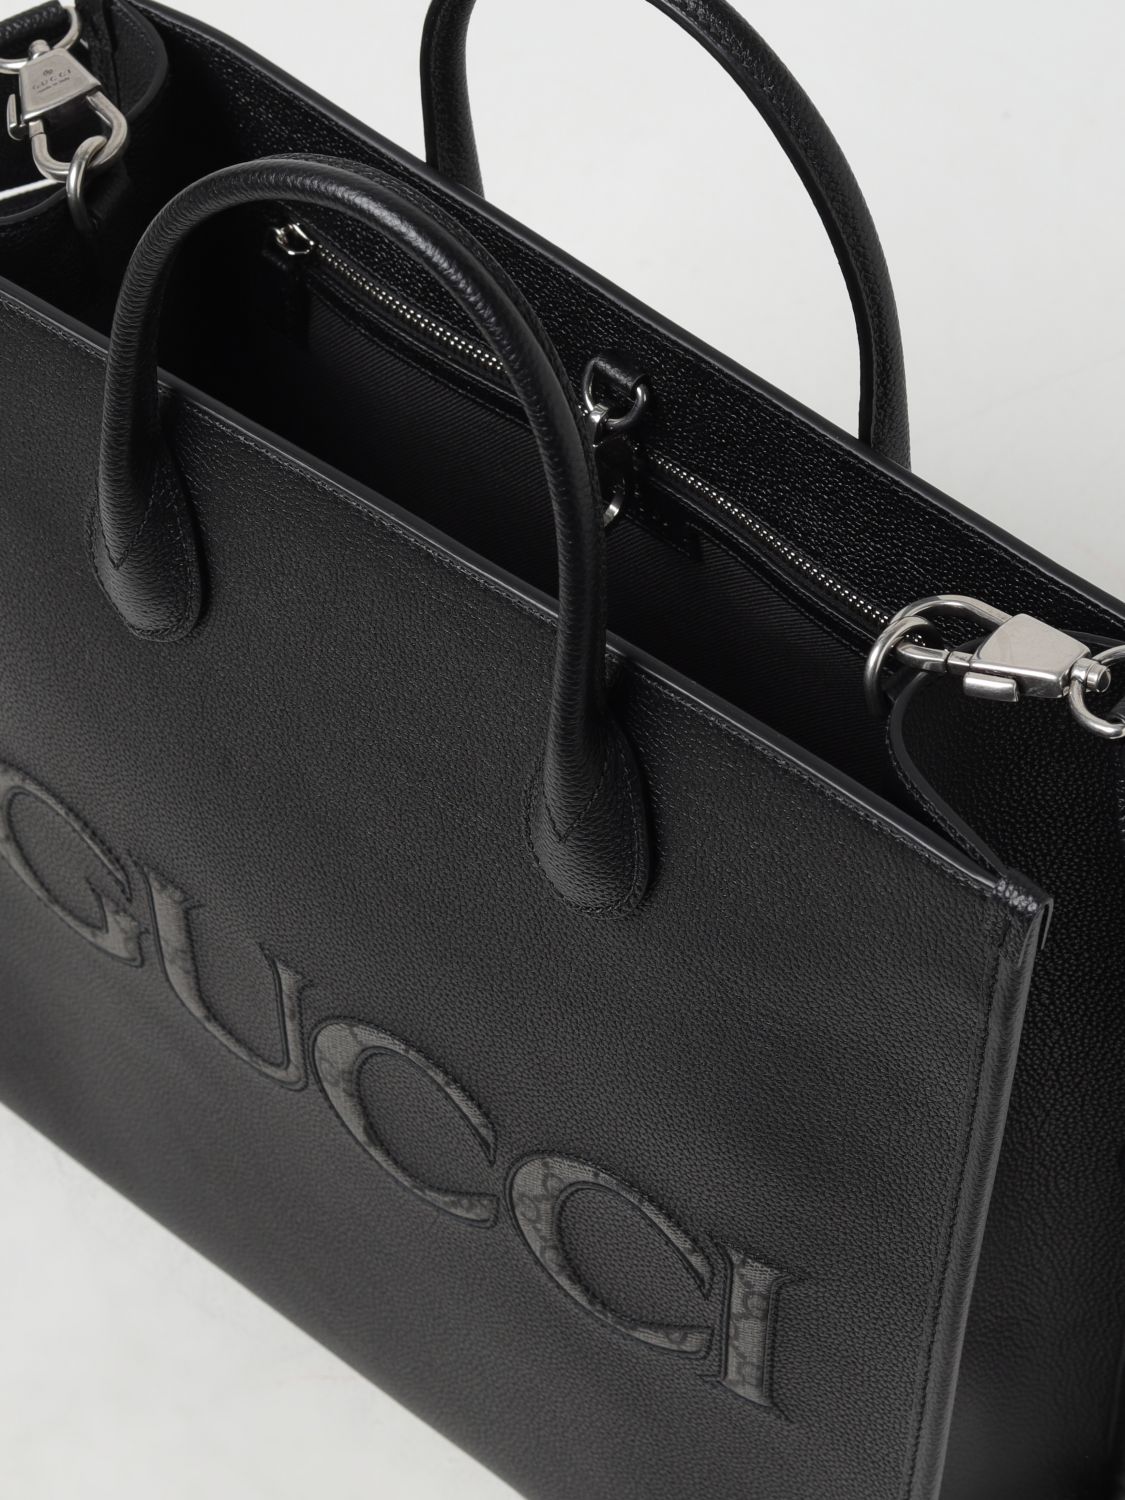 Gucci - Women's Clutches & Evening Bags - 56 products | FASHIOLA.com.au